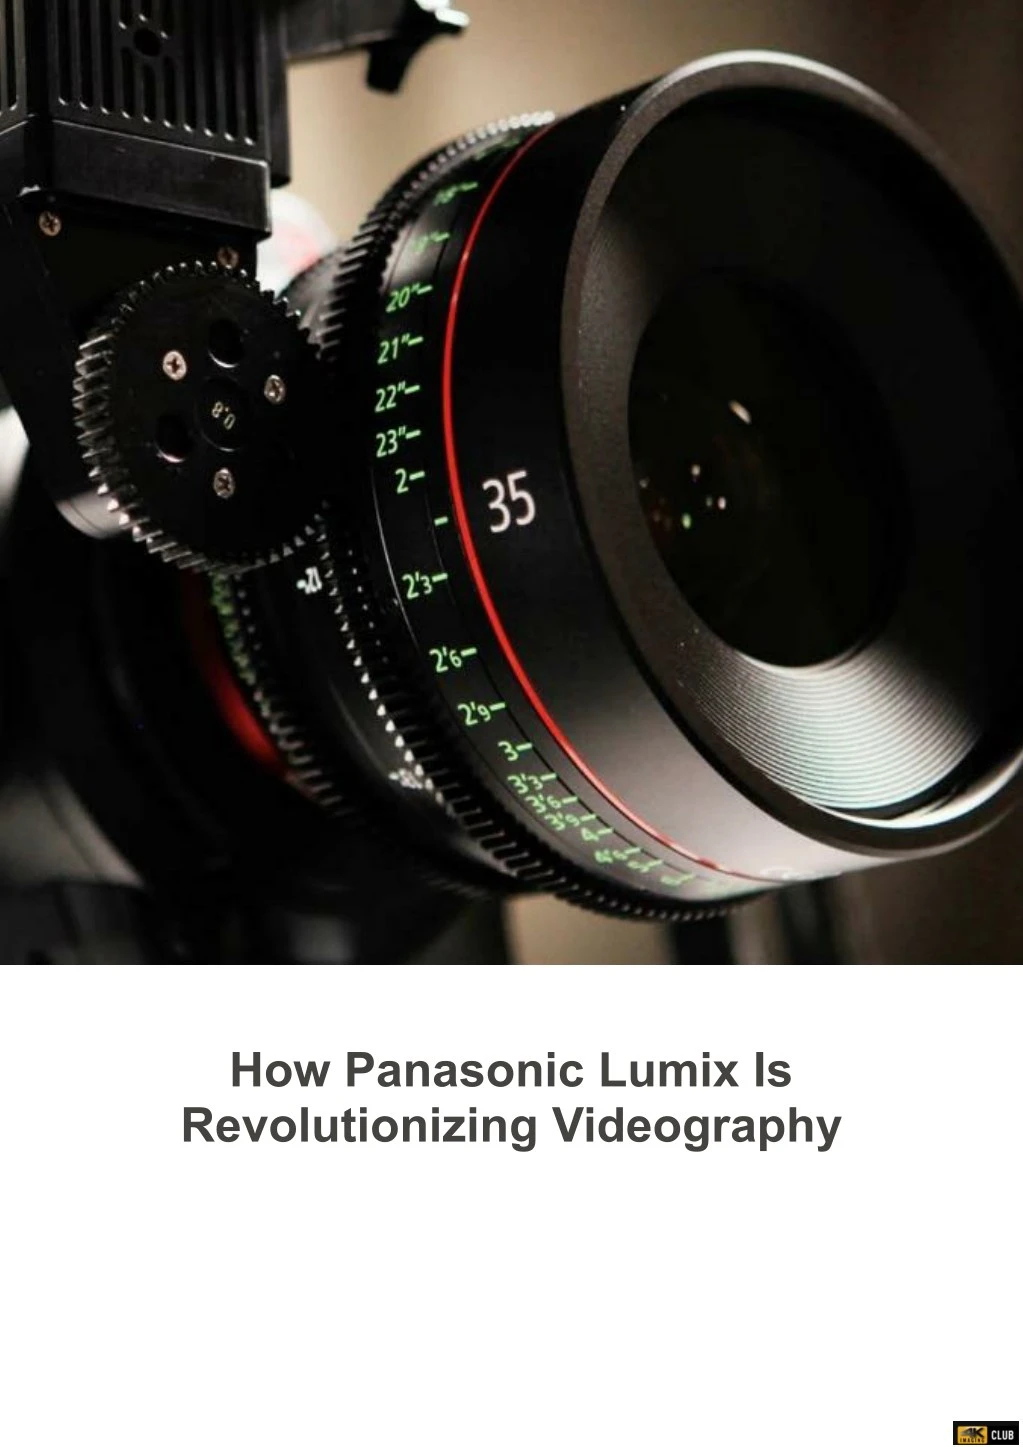 how panasonic lumix is revolutionizing videography